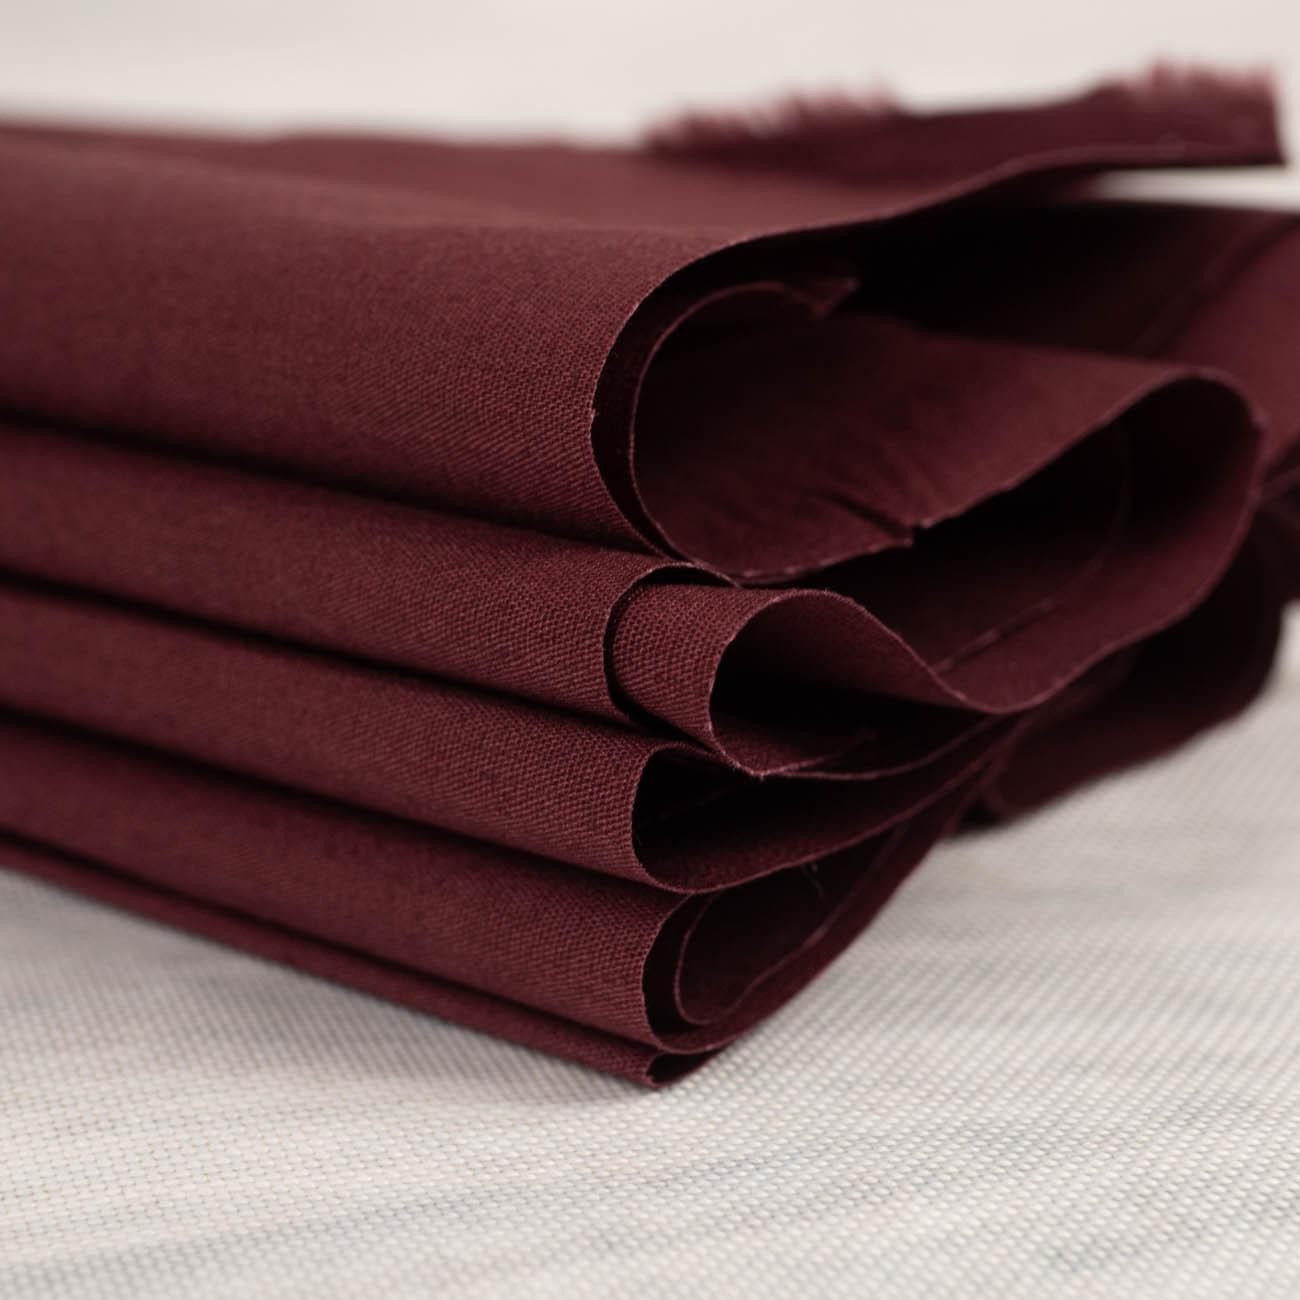 MAROON - Cotton woven fabric